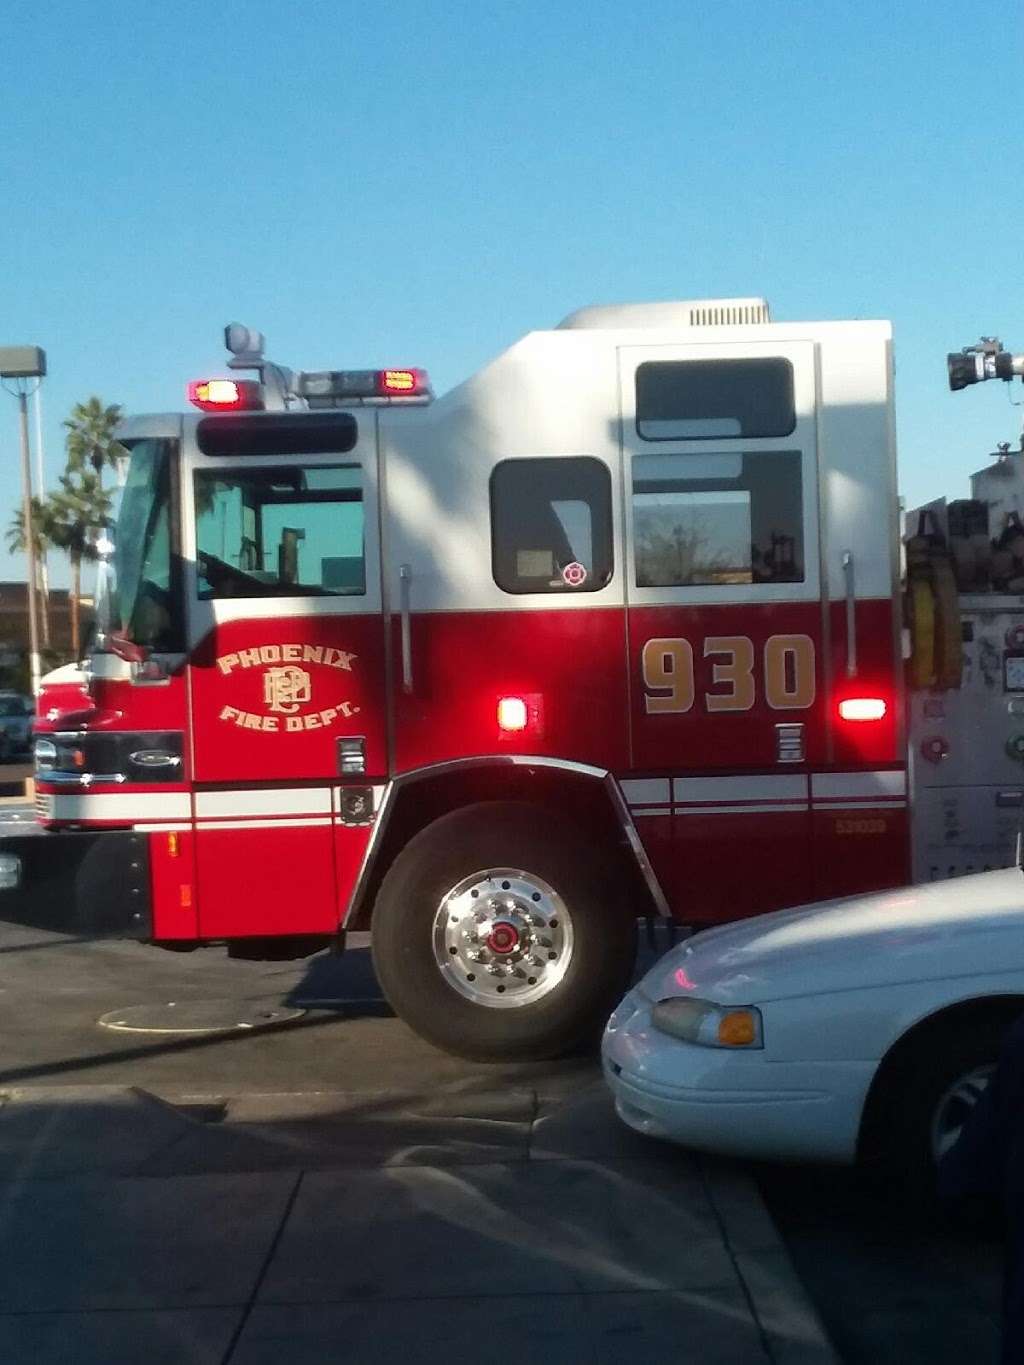 Phoenix Fire Department Station 30 | 2701 W Belmont Ave, Phoenix, AZ 85051, USA